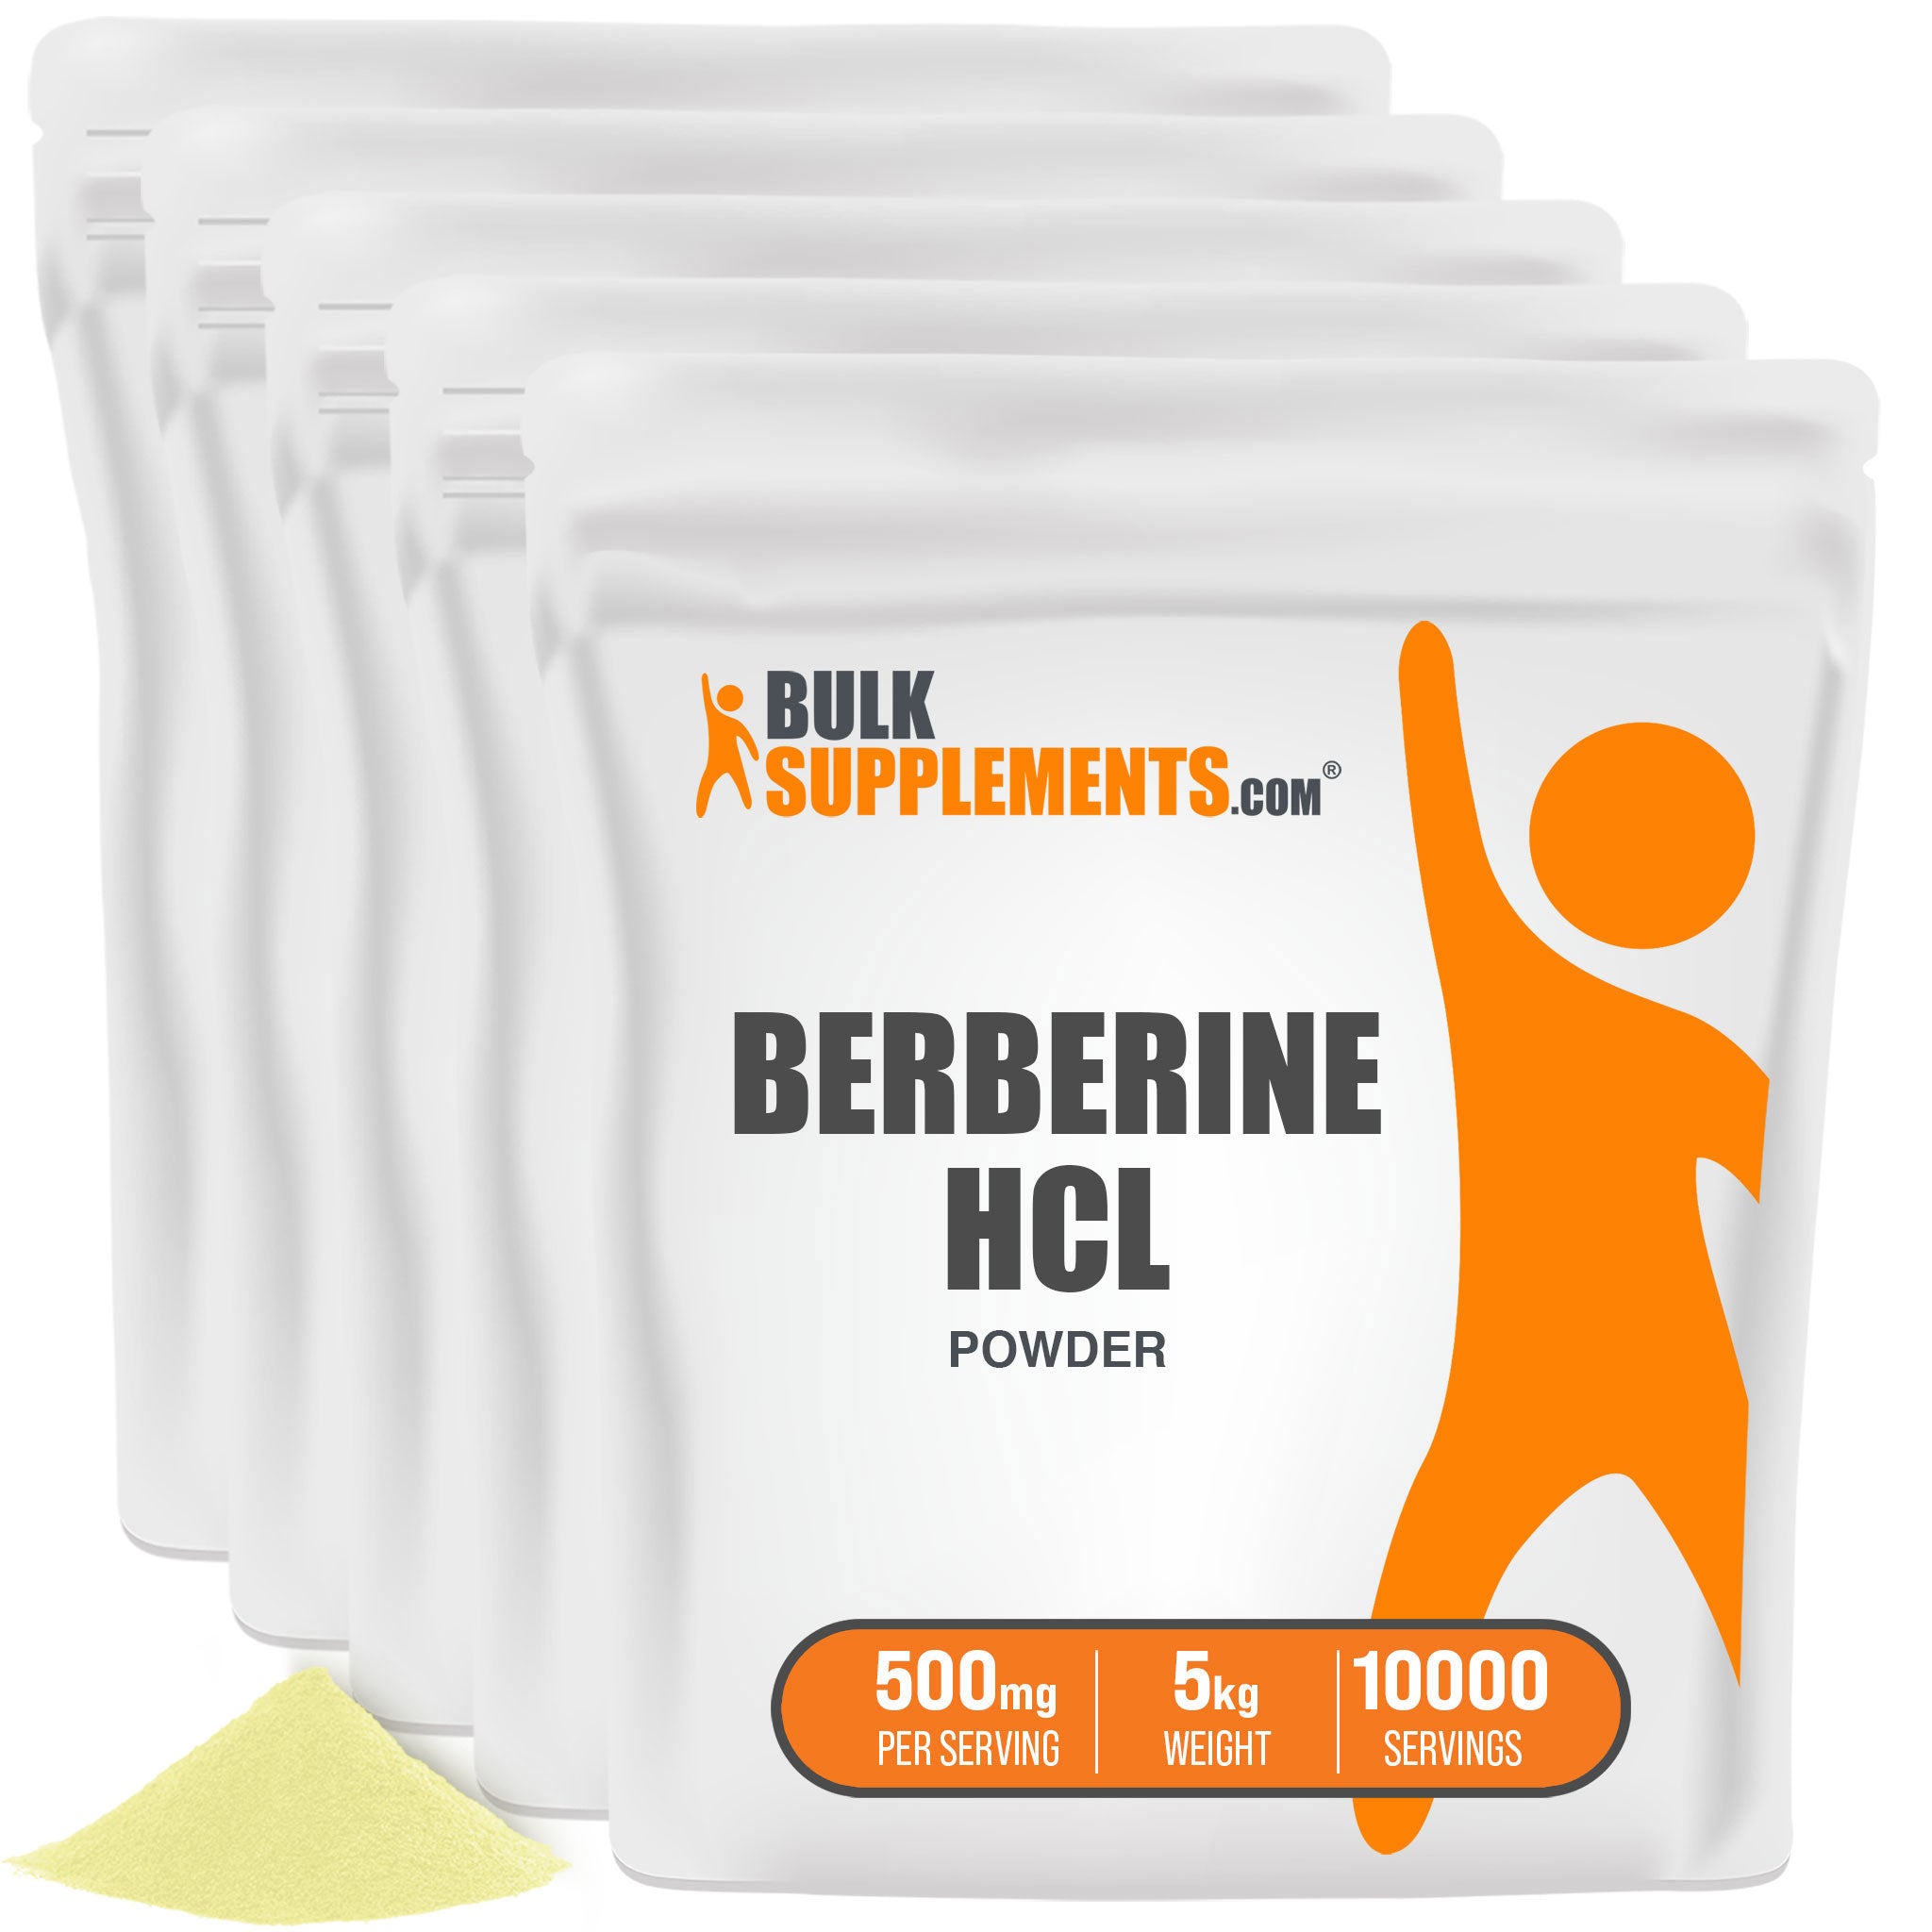 Berberine HCl bulk pack of five 1kg bags, with 10000 servings total 